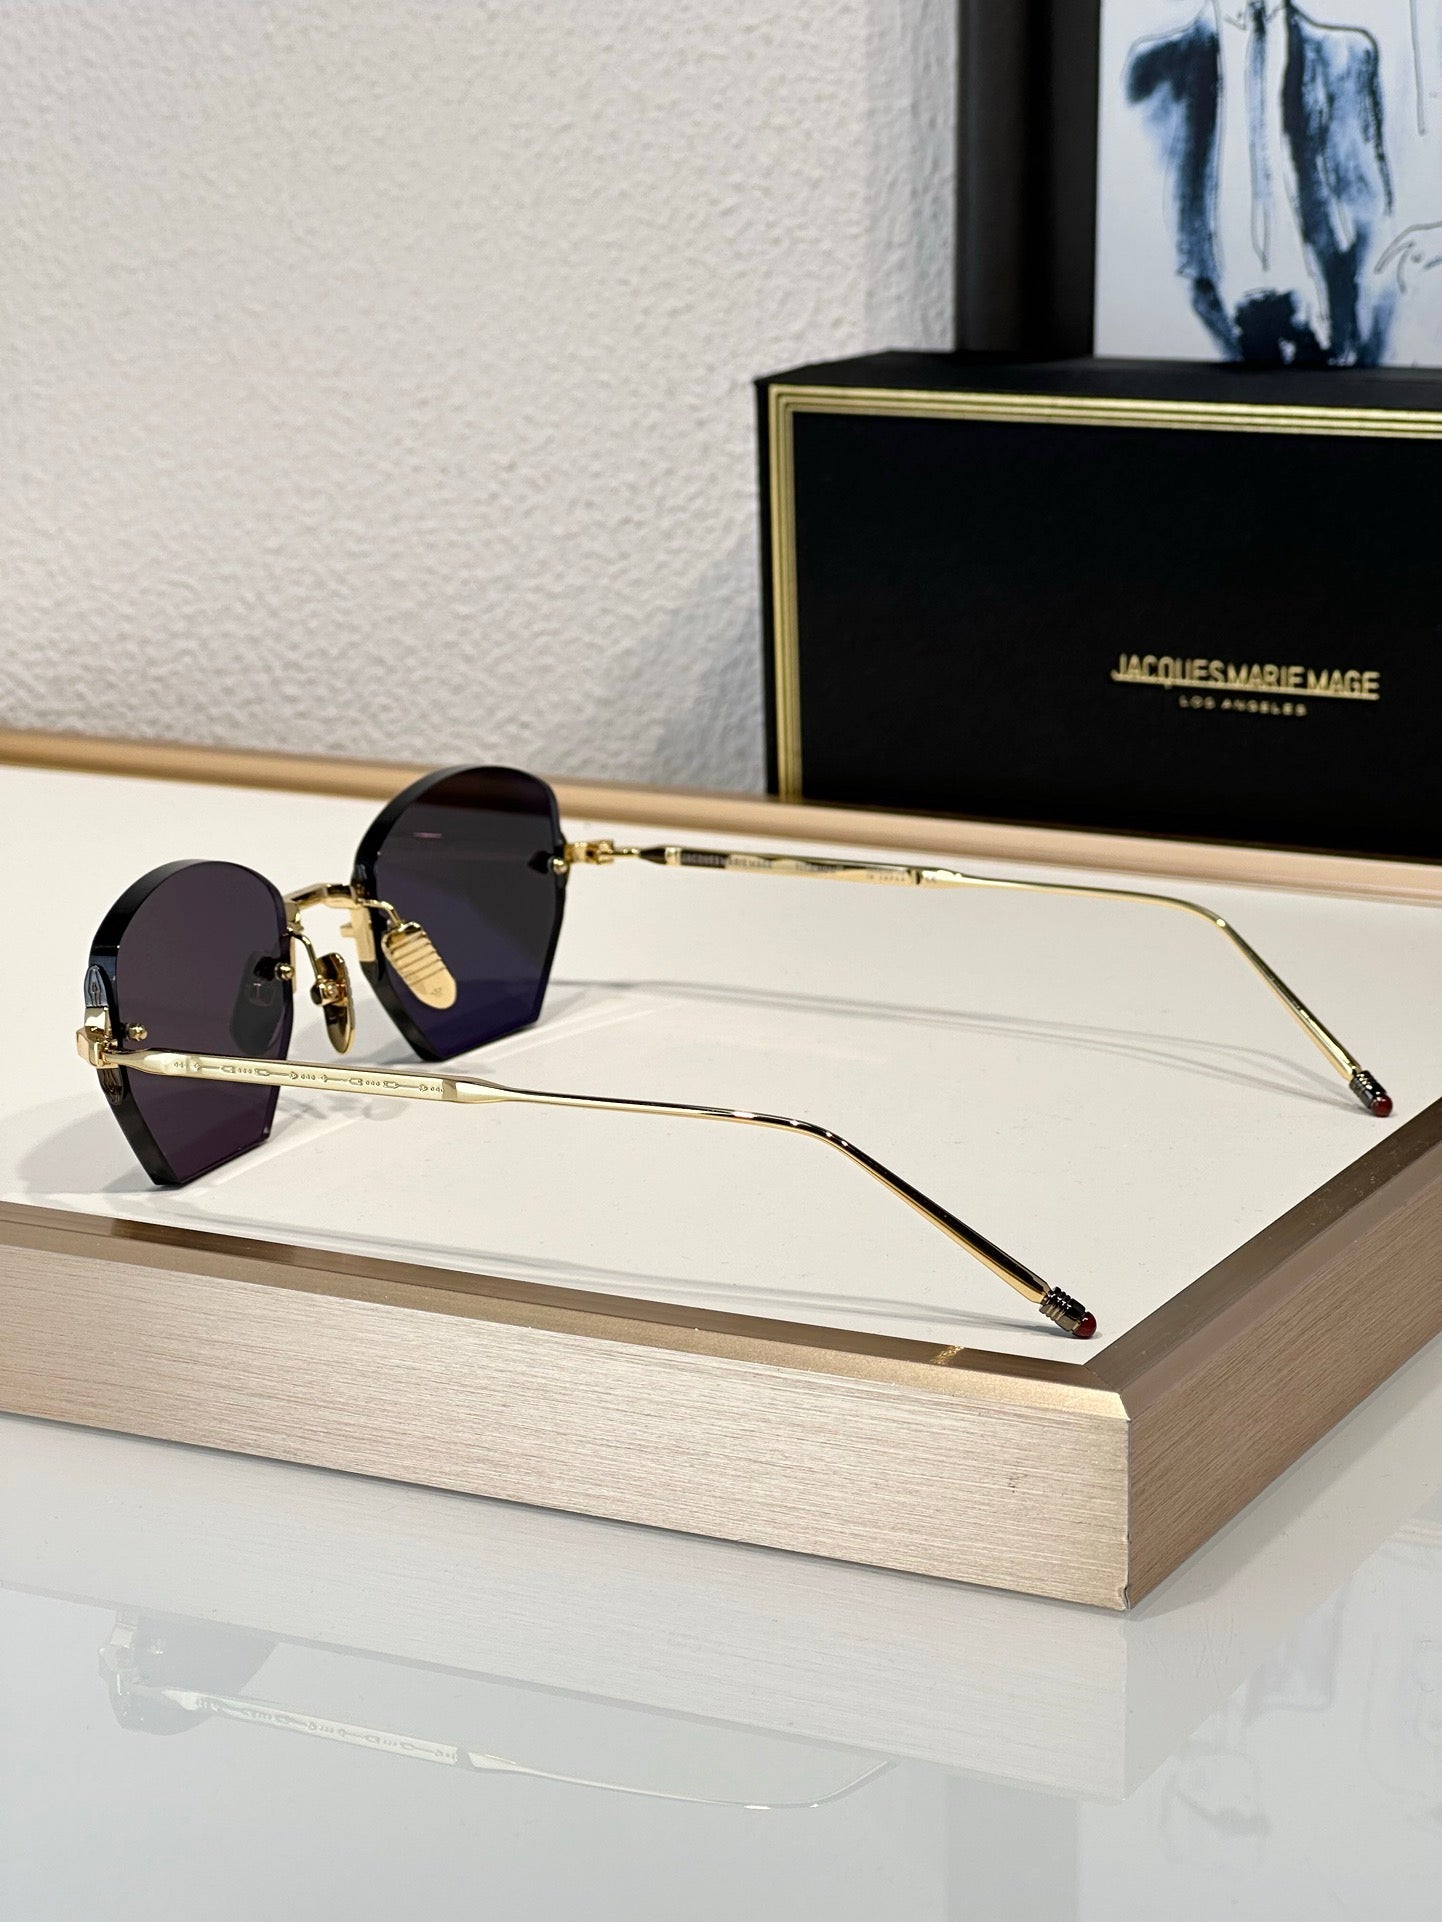 Jacques Marie Mage OATMAN 48mm Lens Sunglasses ✨$1250 - buyonlinebehappy